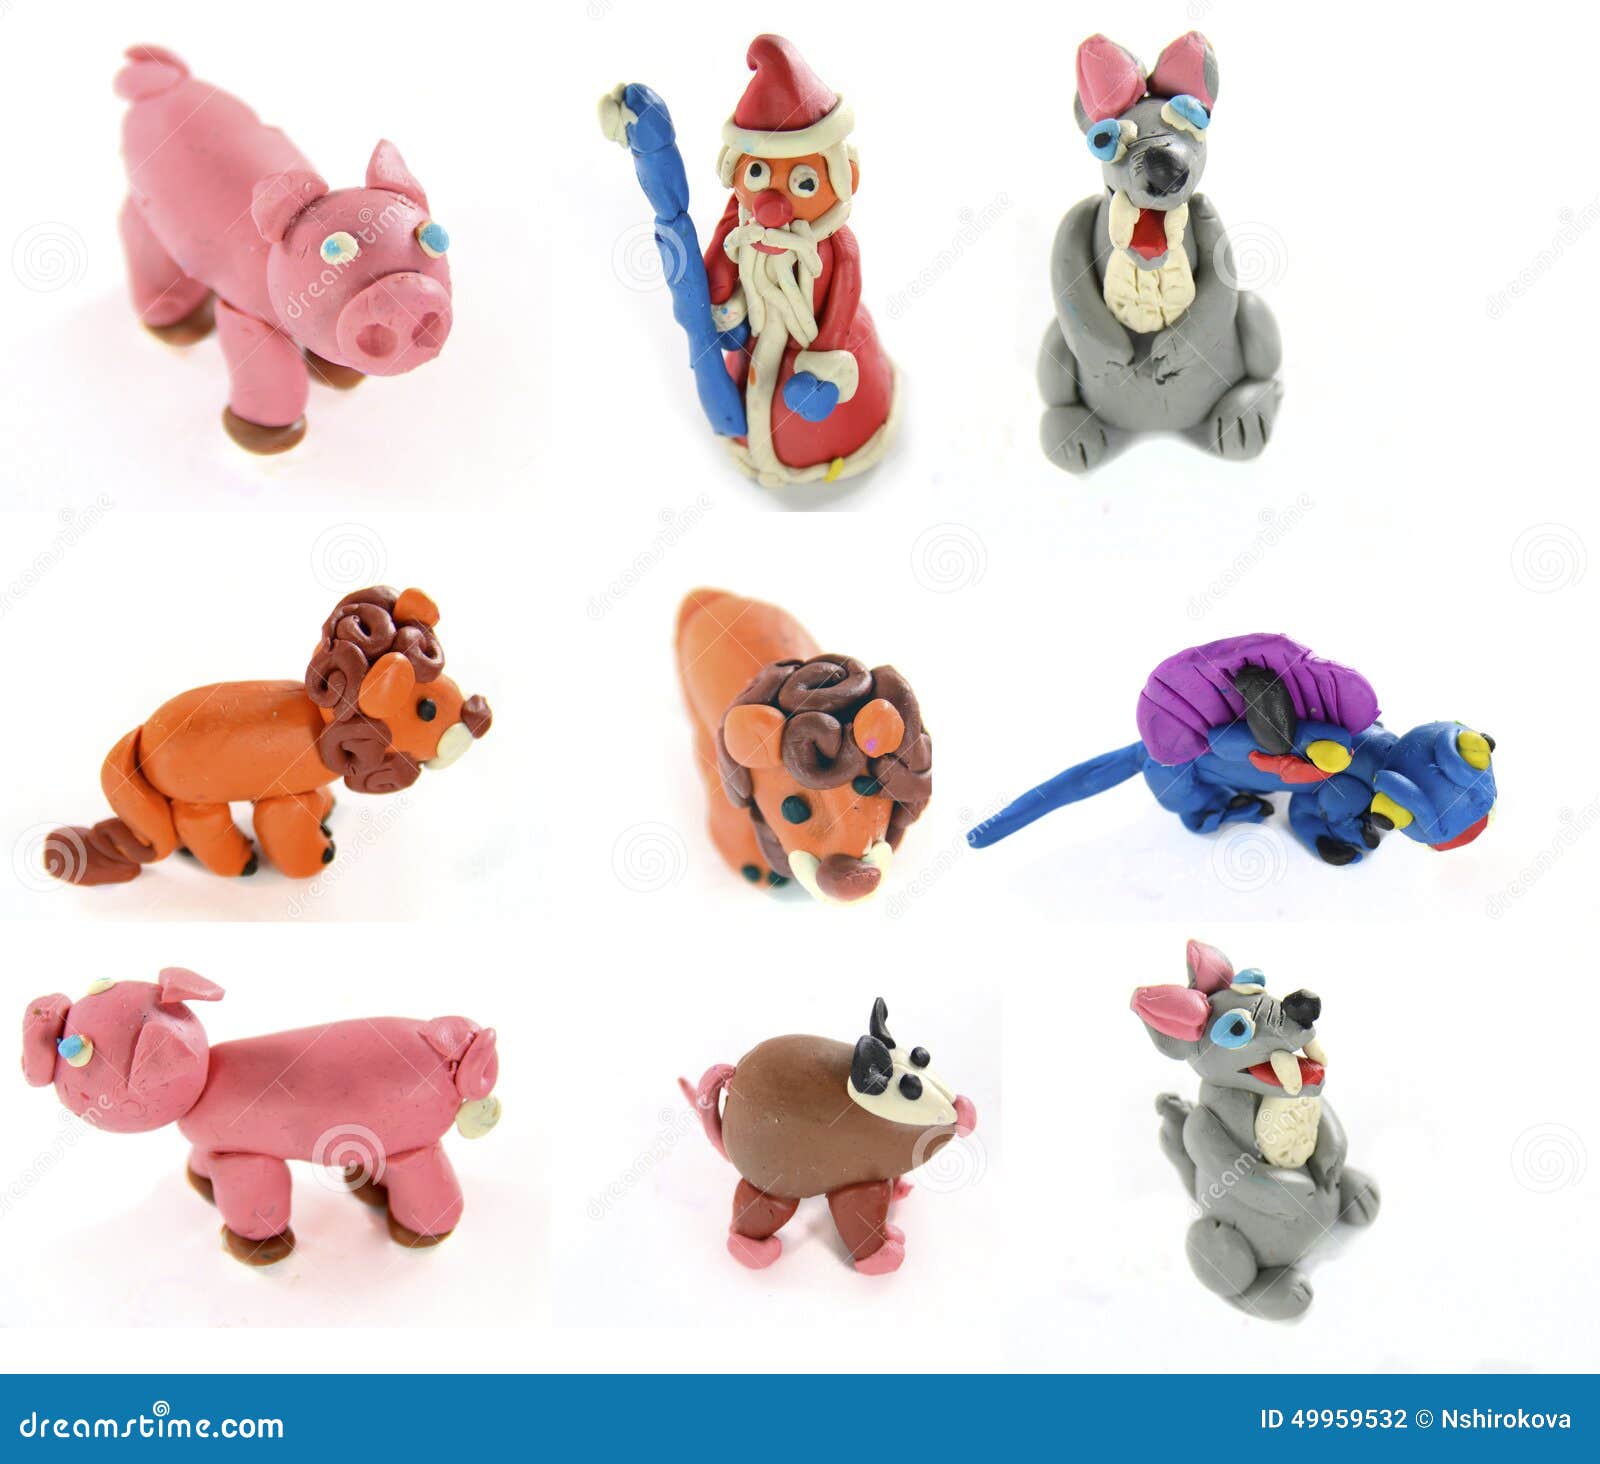 8,836 Plasticine Animals Images, Stock Photos, 3D objects, & Vectors